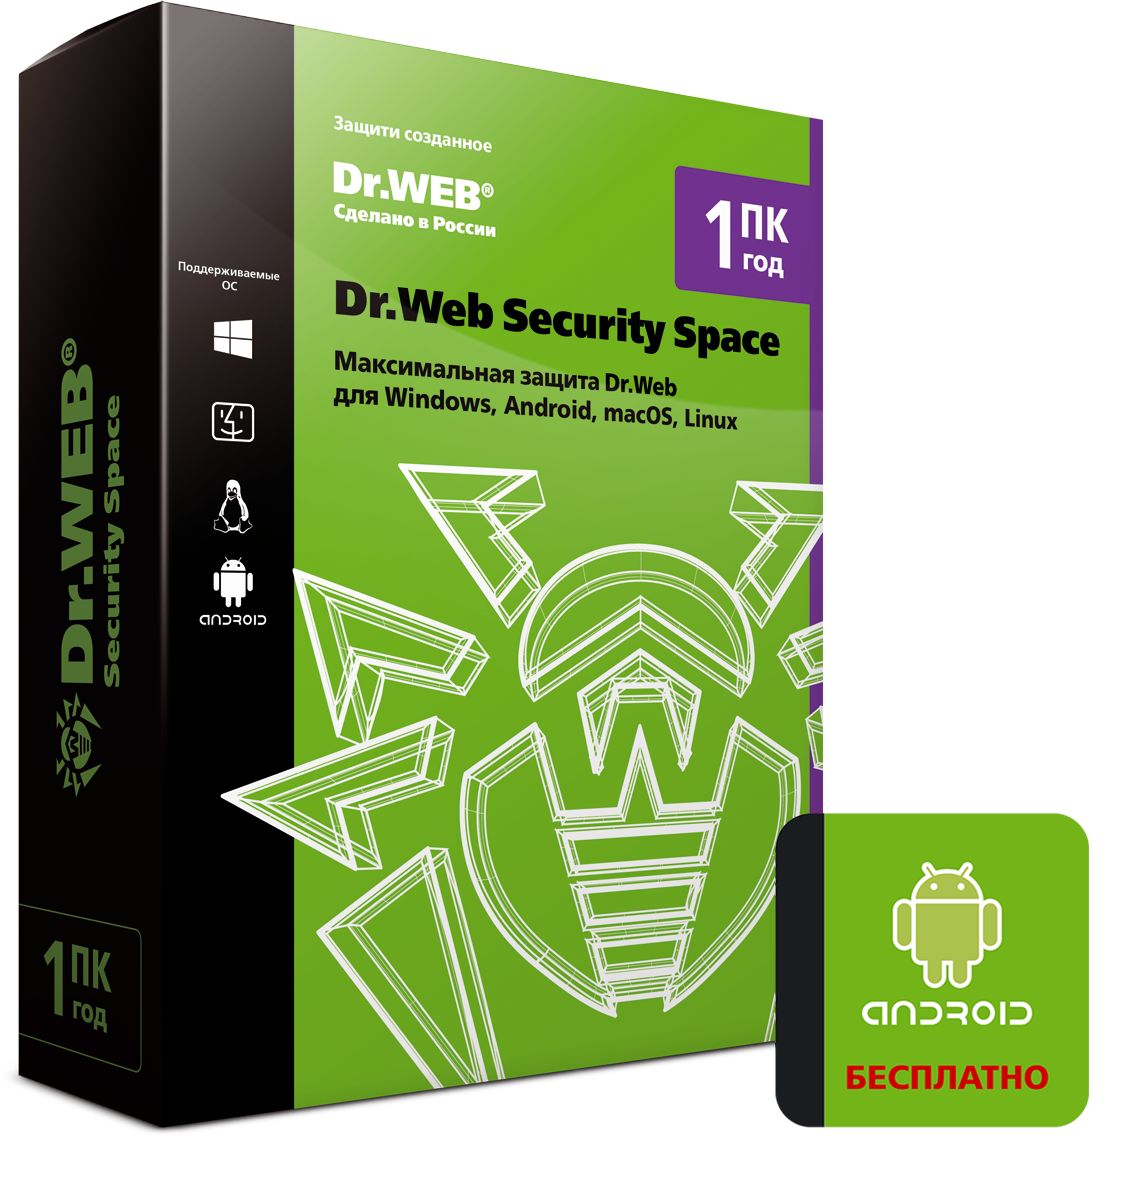 Антивирус Dr.Web Security Space на 1 год на 1 ПК [BHW-B-12M-1-A3] (Box) dr web security space продление 1 пк 1 моб устр 1 год [цифровая версия] цифровая версия